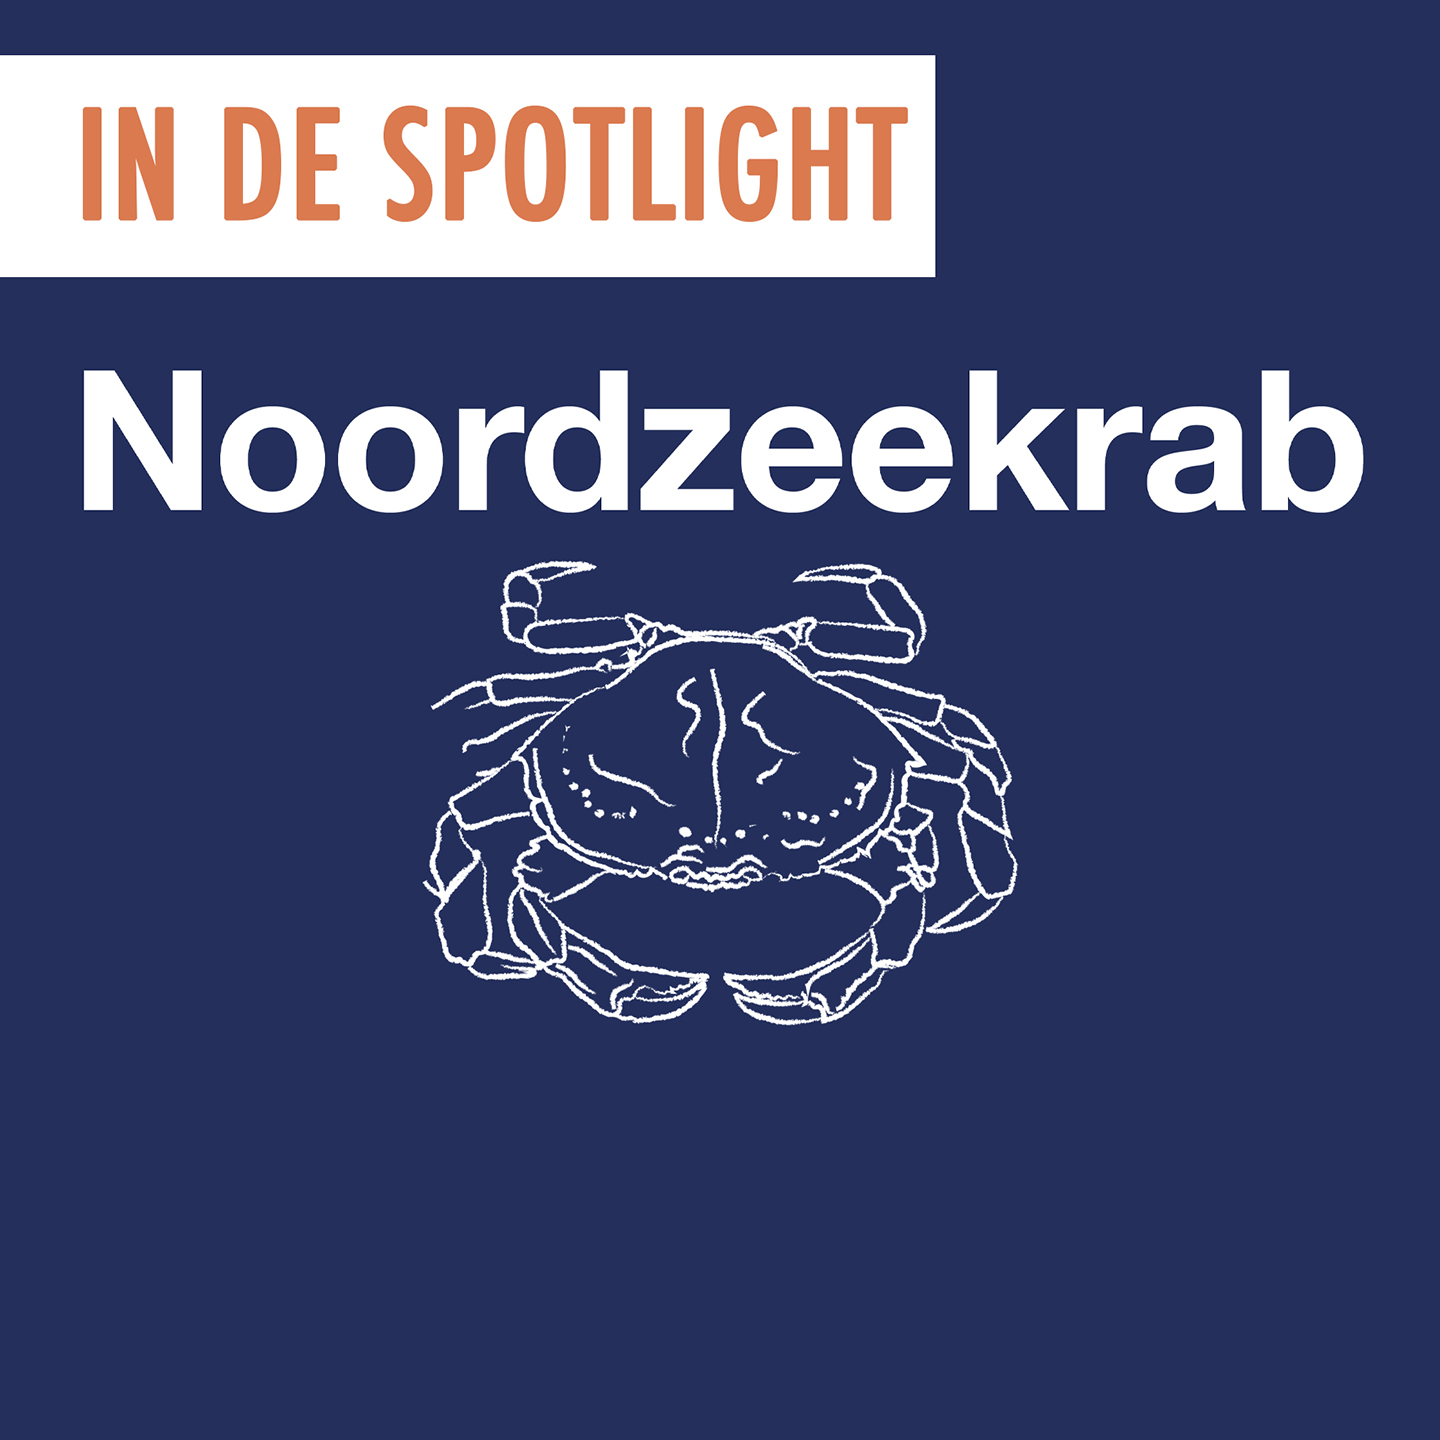 Spotlight september | Noordzee krab